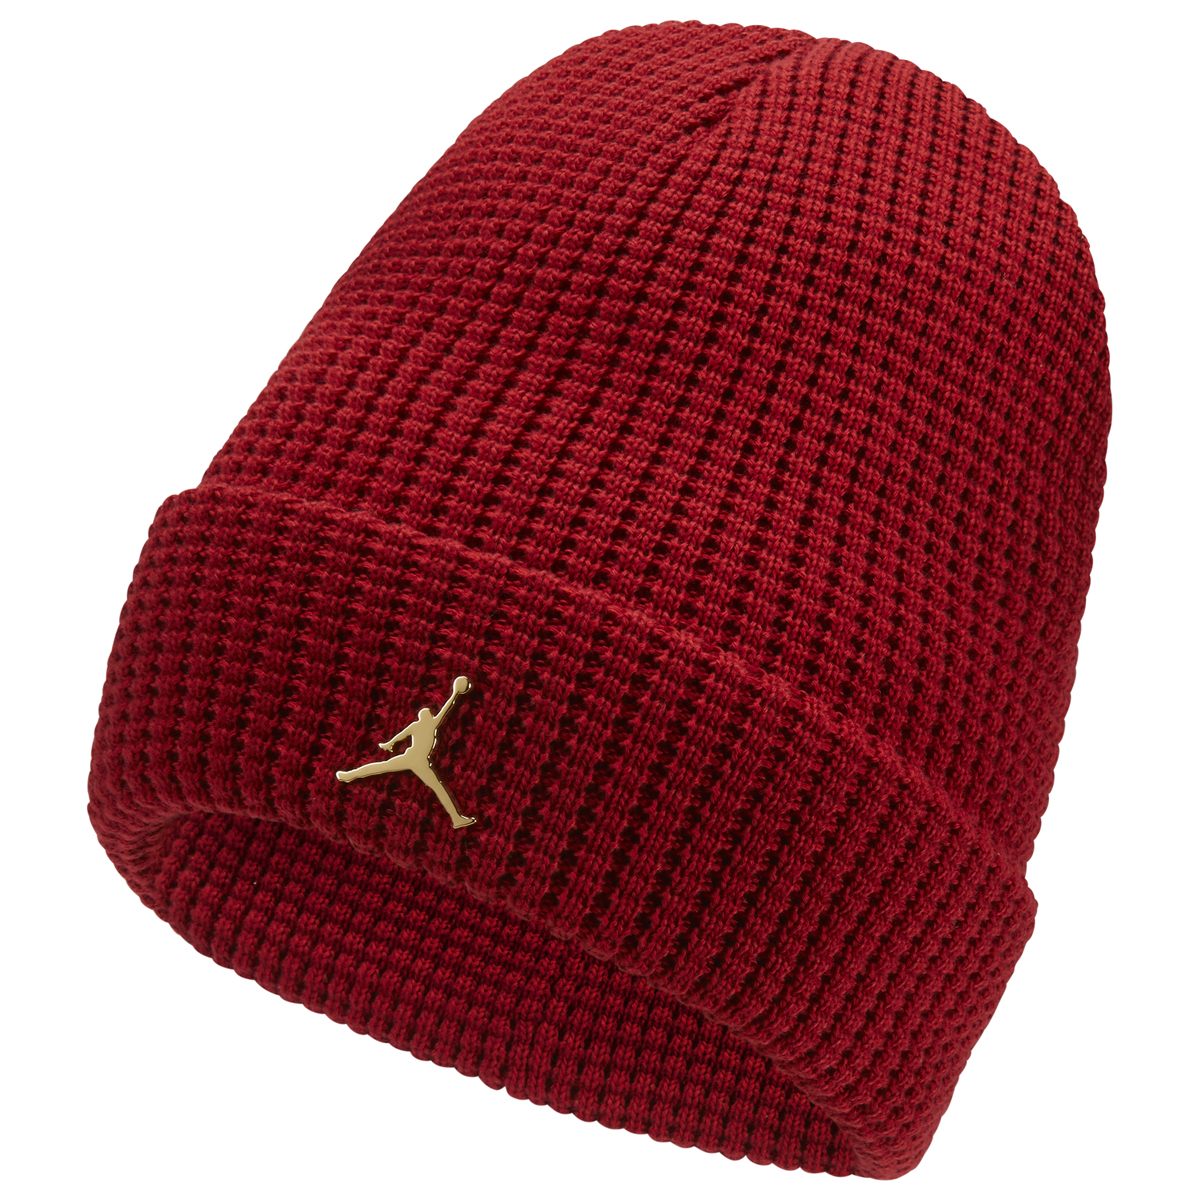 Jordan-Red-Beanie-Knit-Hat